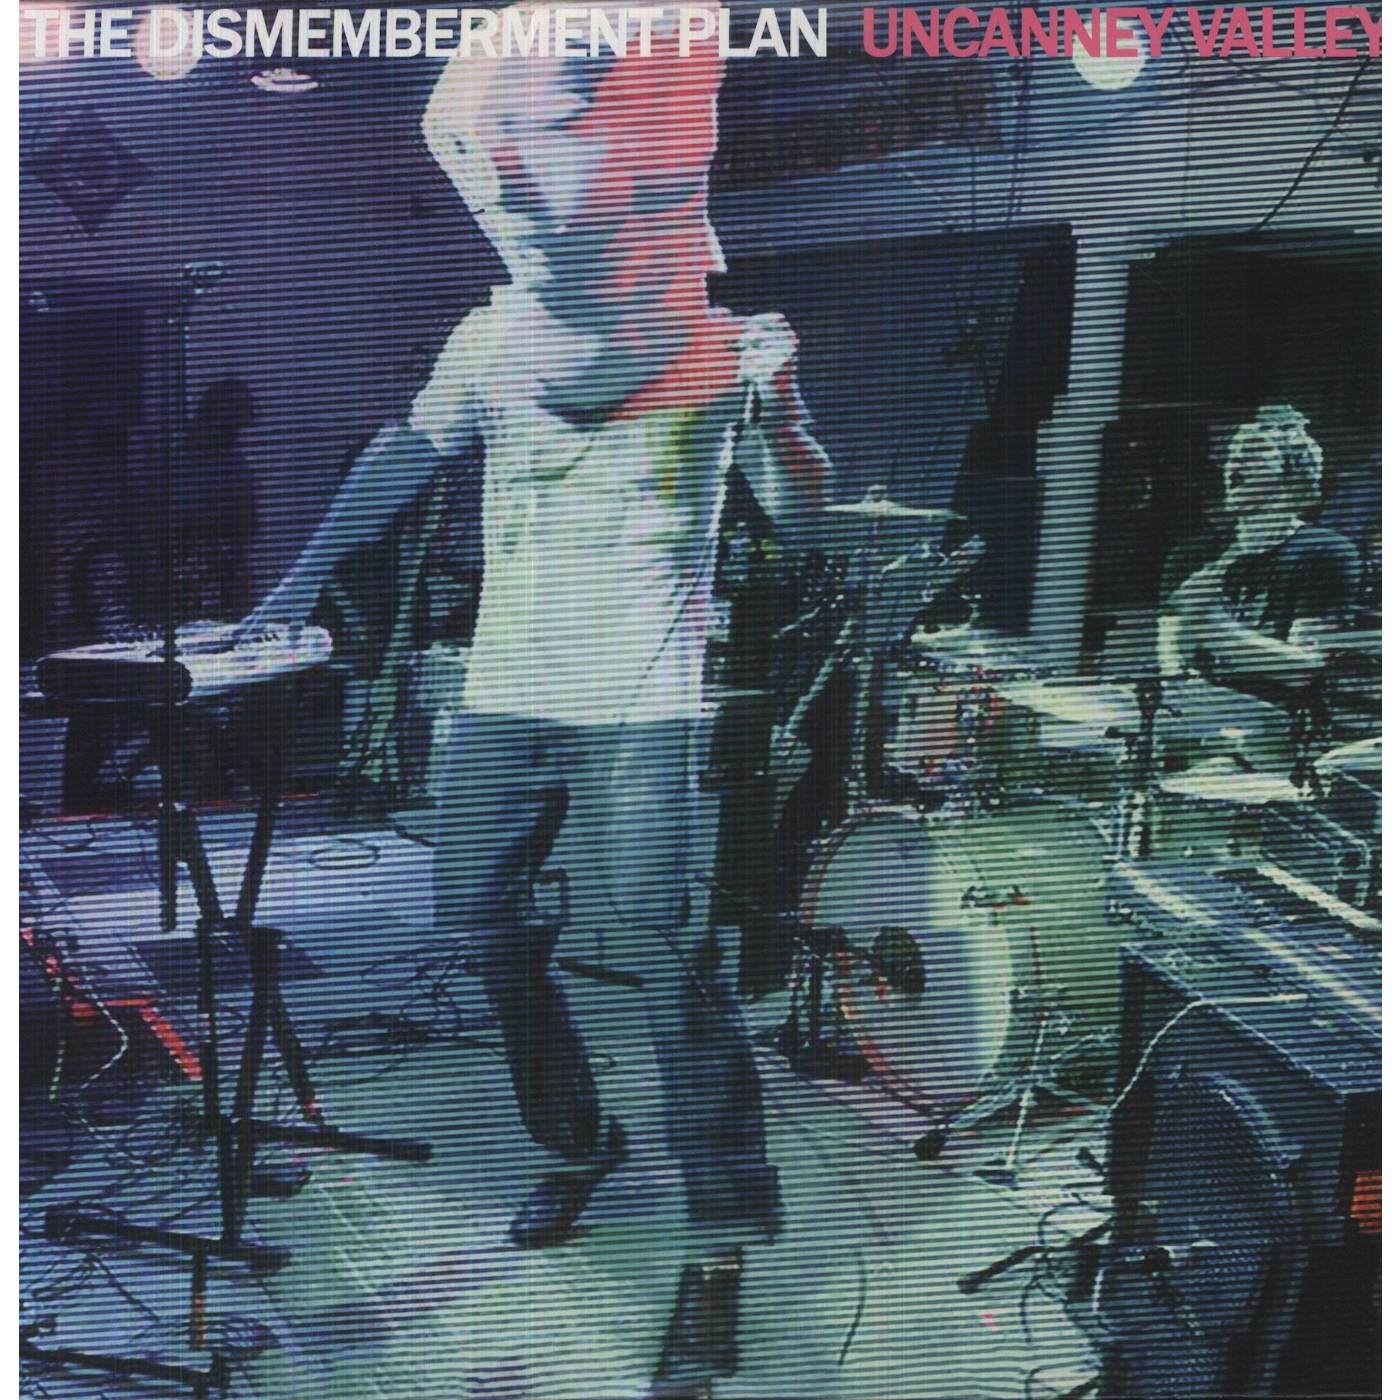 Dismemberment Plan Uncanney Valley Vinyl Record